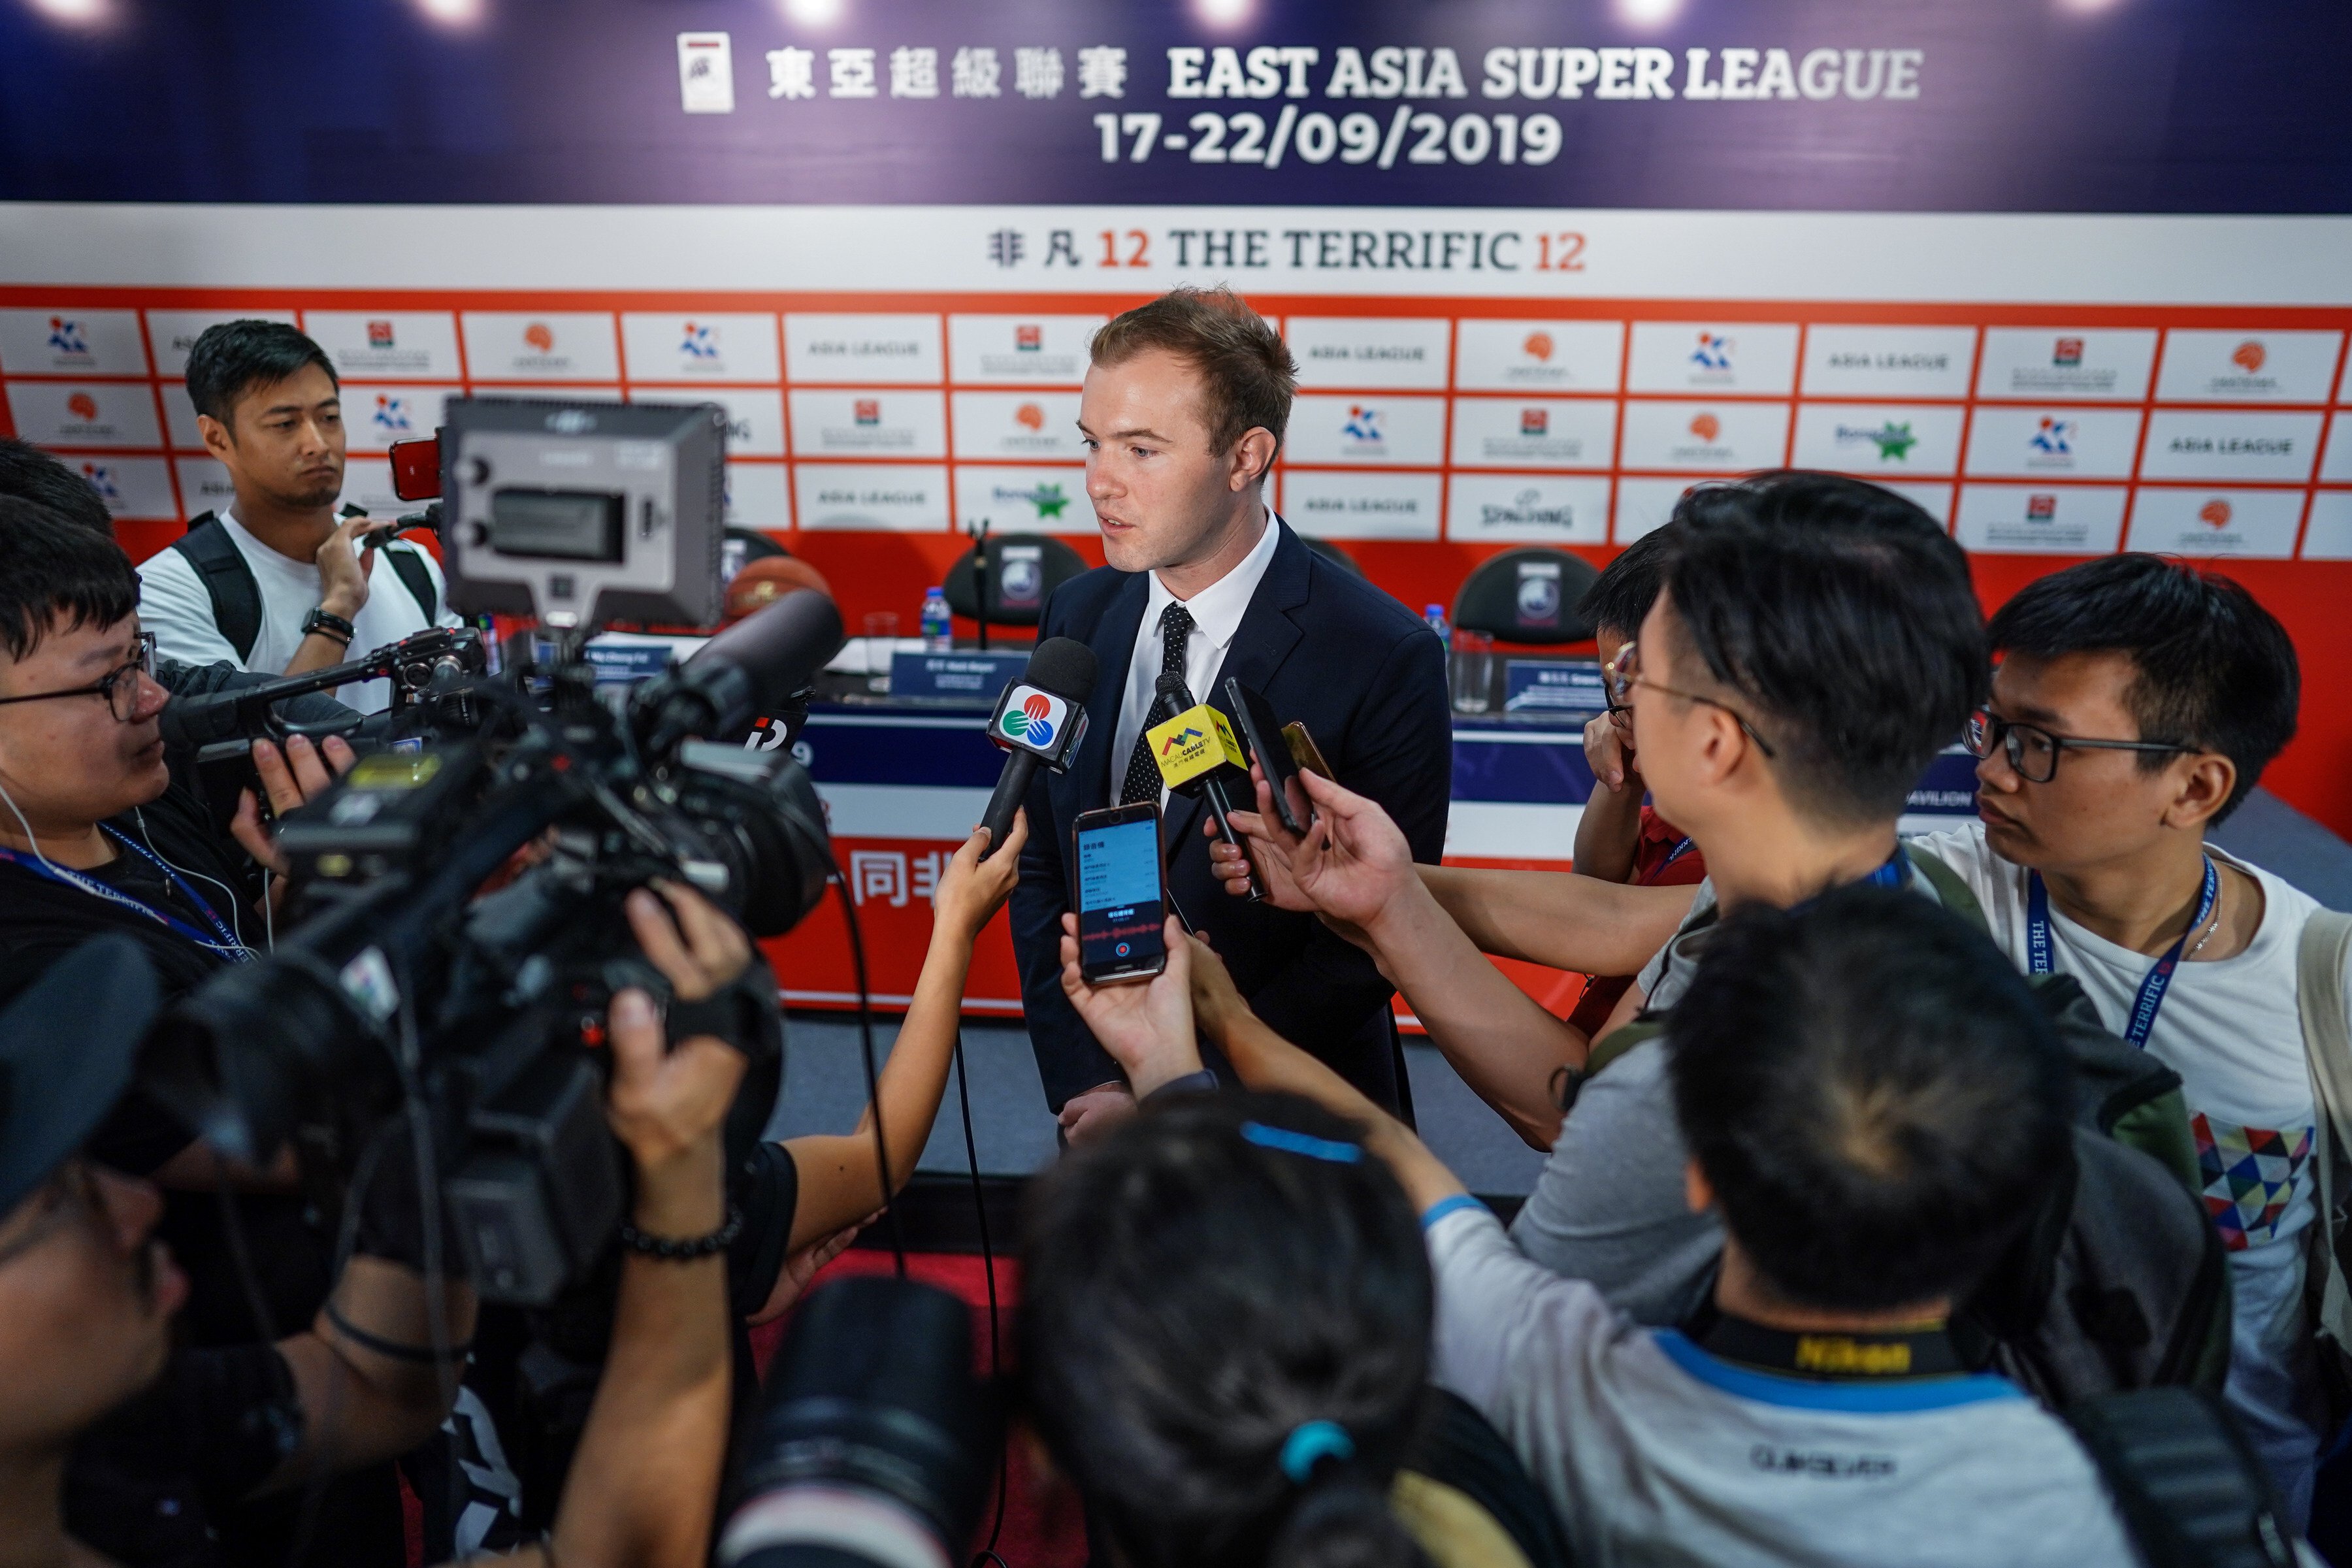 East Asia Super League CEO Matt Beyer at The Terrific 12 event in Studio City, Macau. Photo: Handout   